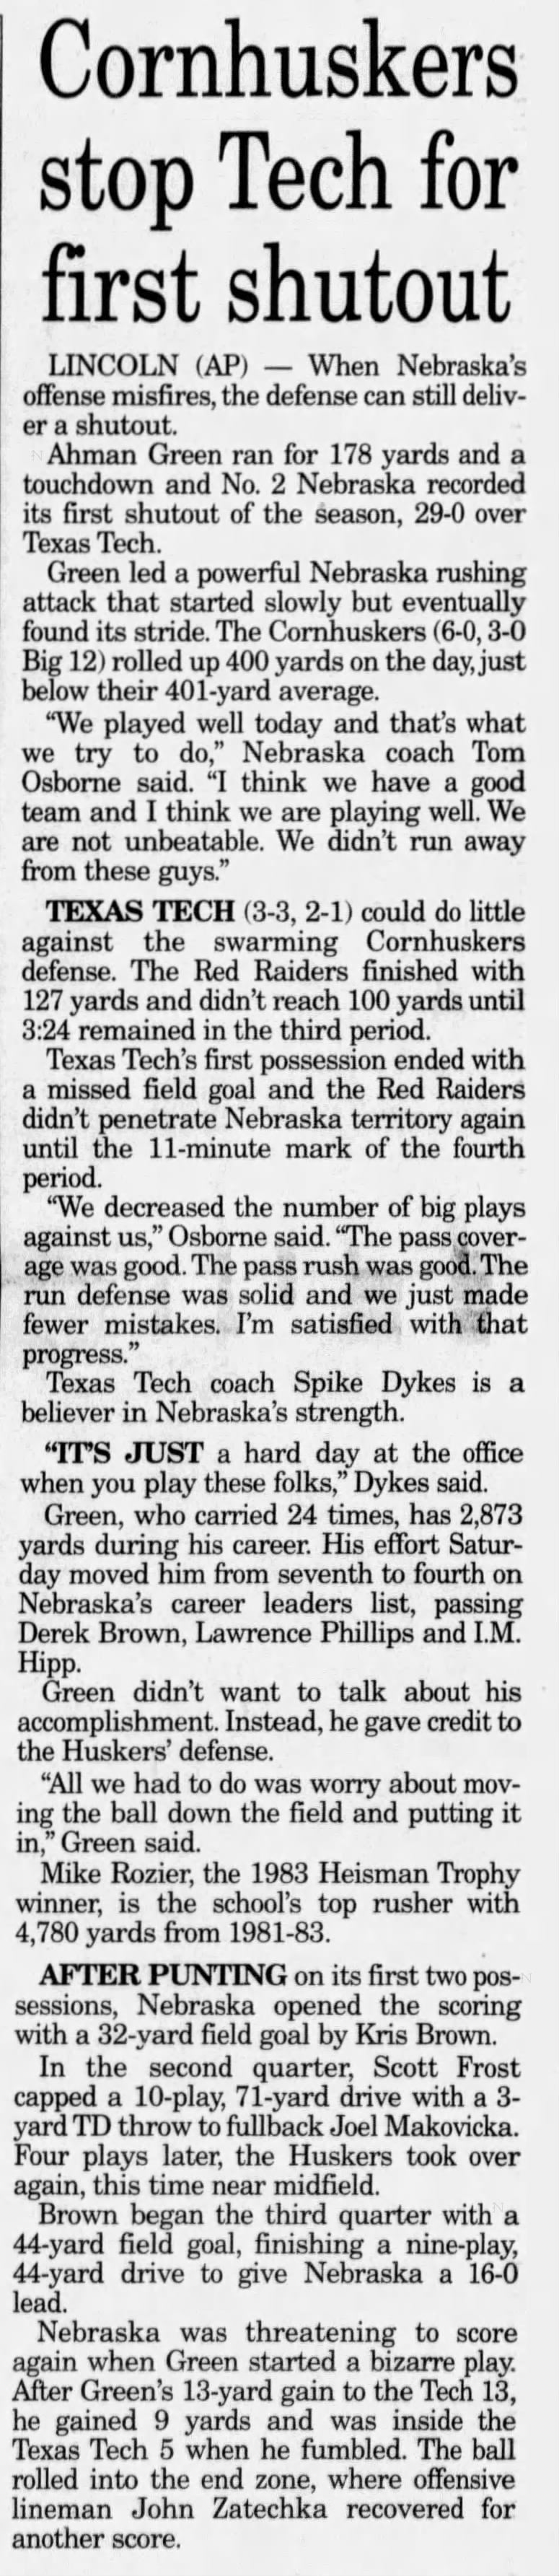 1997 Nebraska-Texas Tech AP